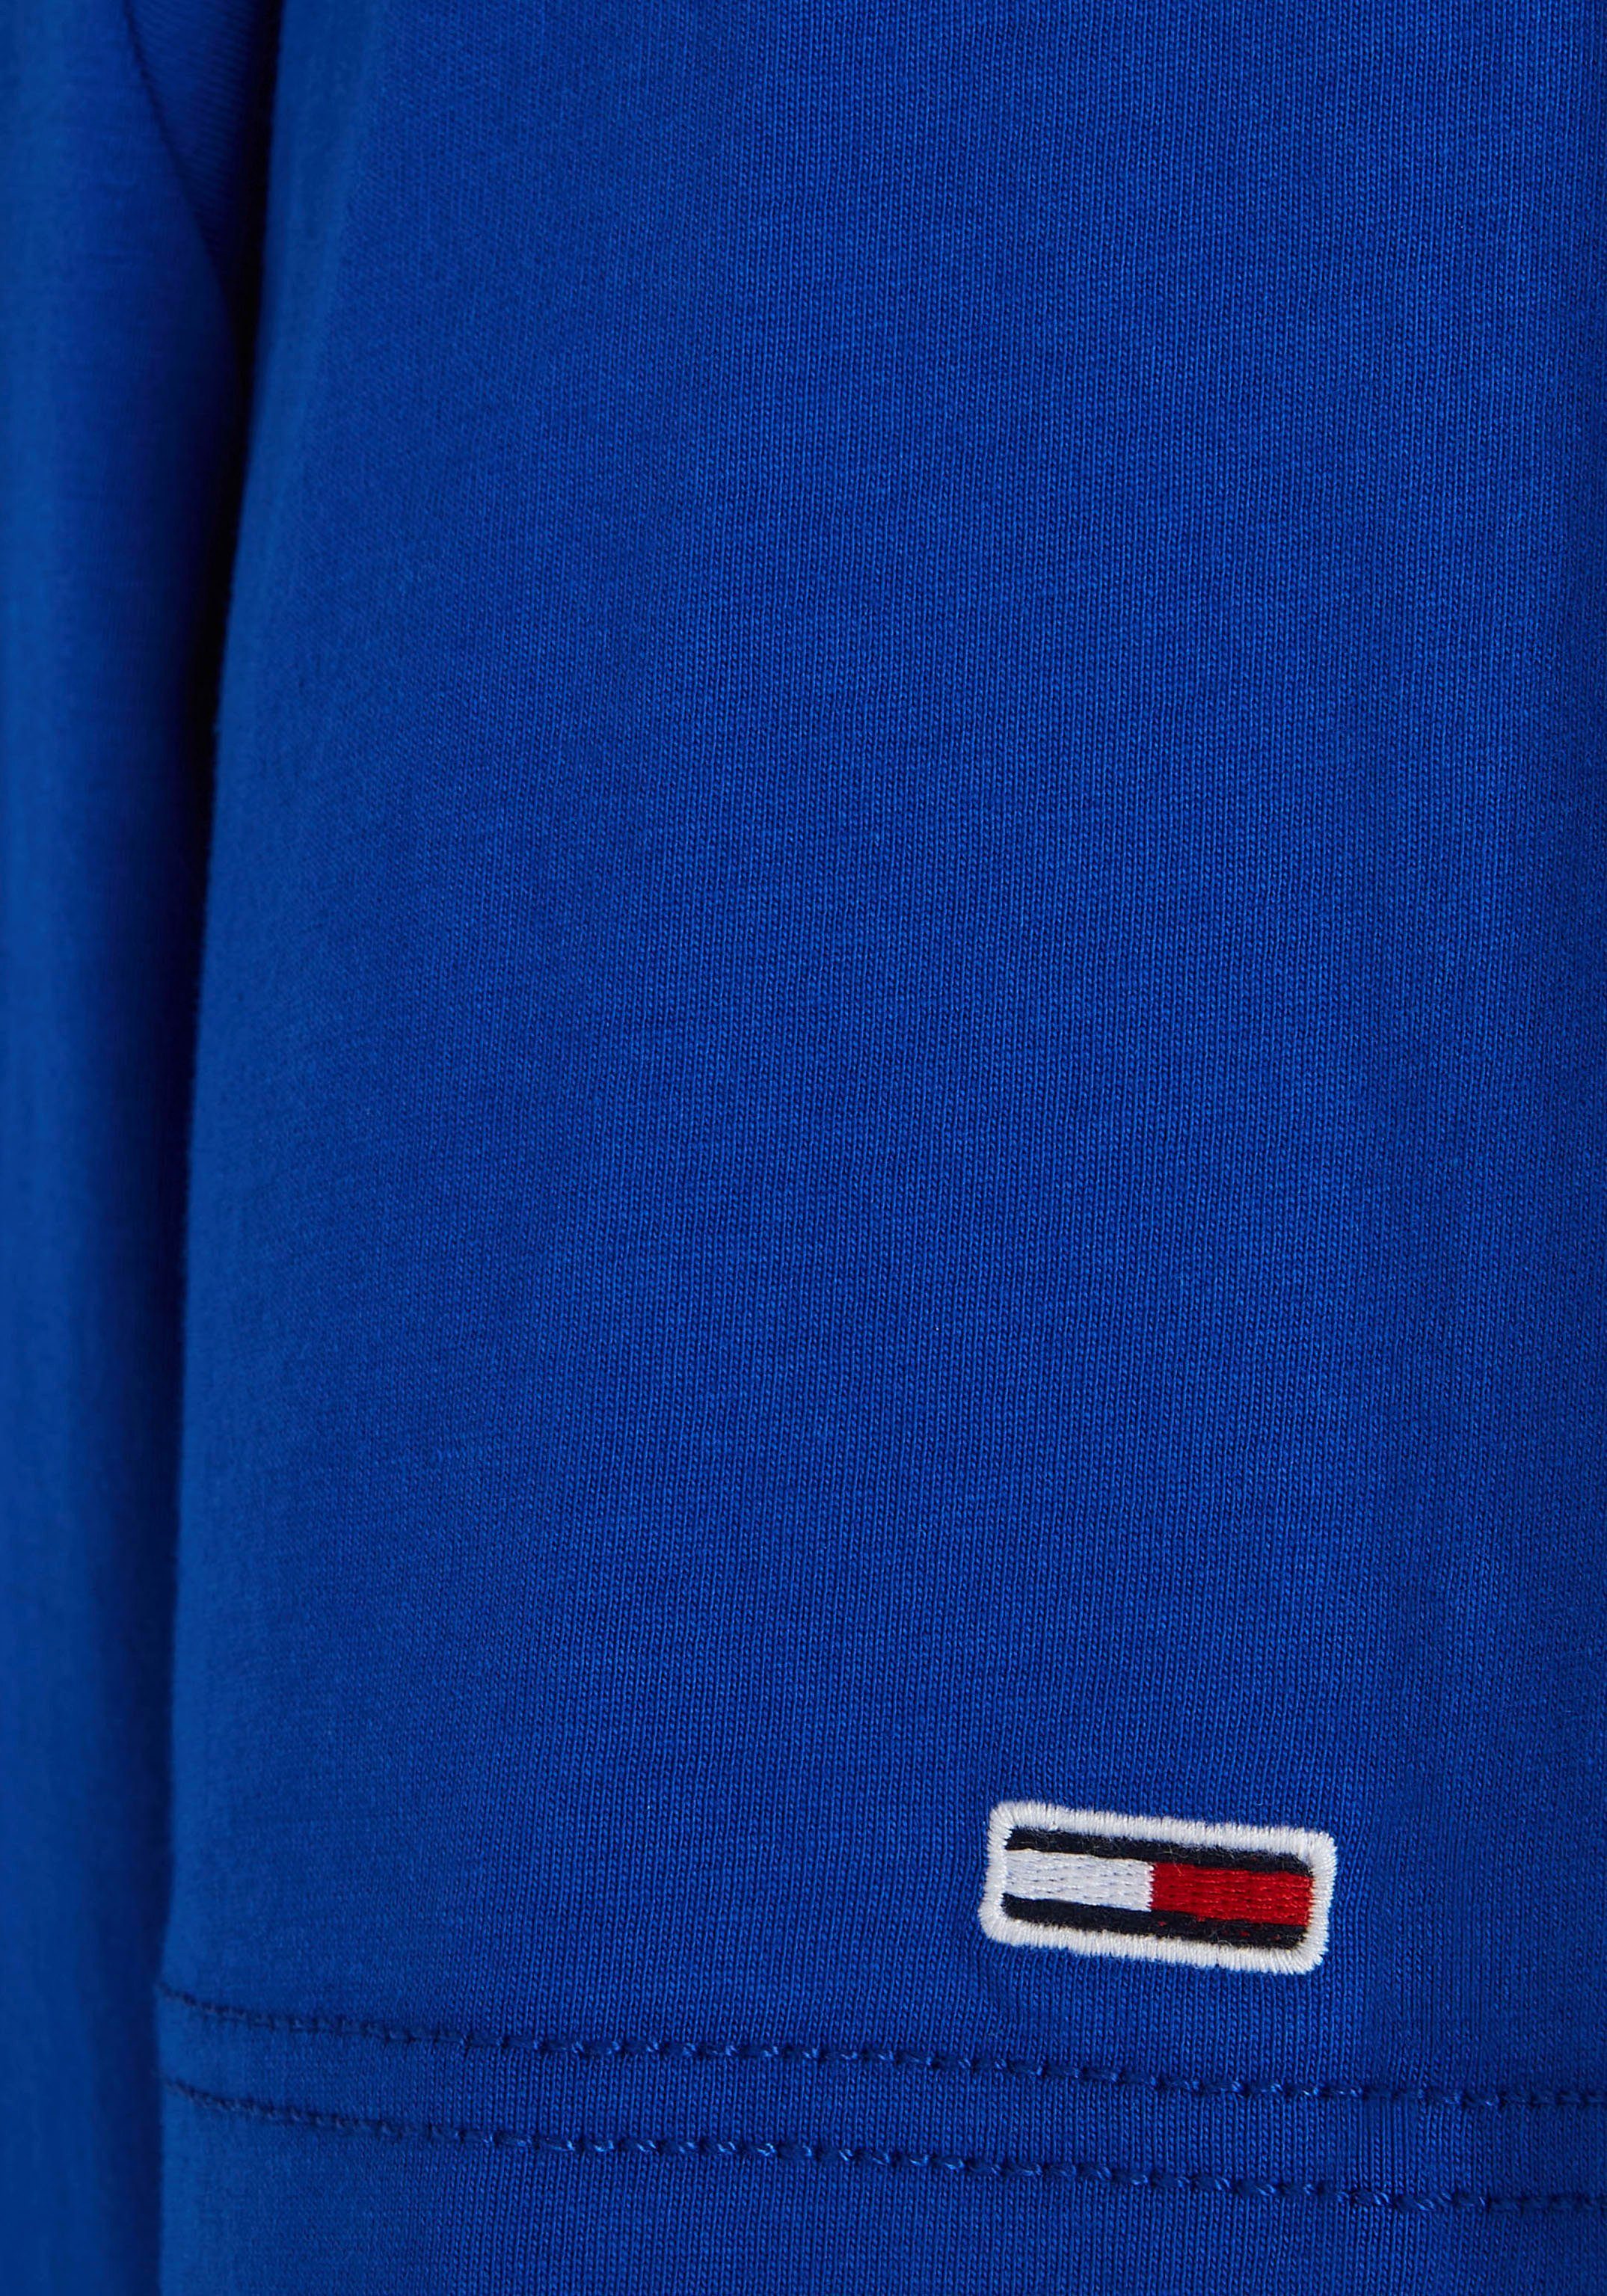 der Ultra Brust GRAPHIC Print Jeans Tommy Blue ESSENTIAL auf mit TJM PLUS TEE Plus T-Shirt